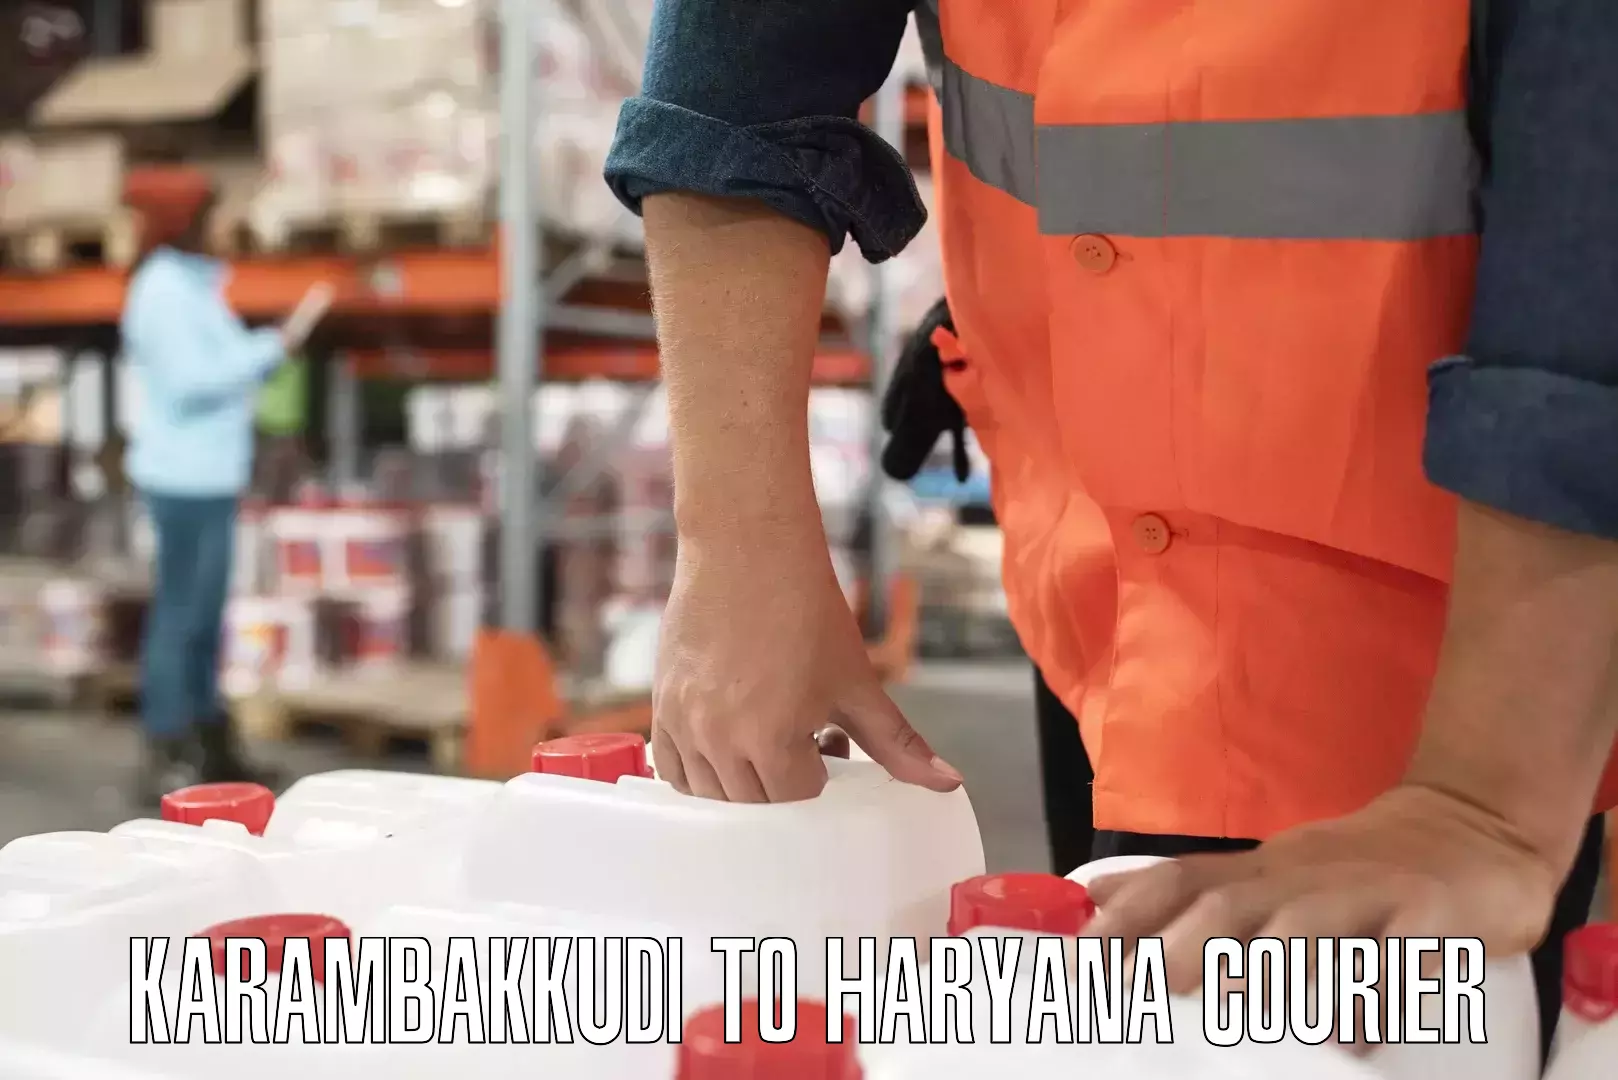 Bulk shipping discounts Karambakkudi to Panipat